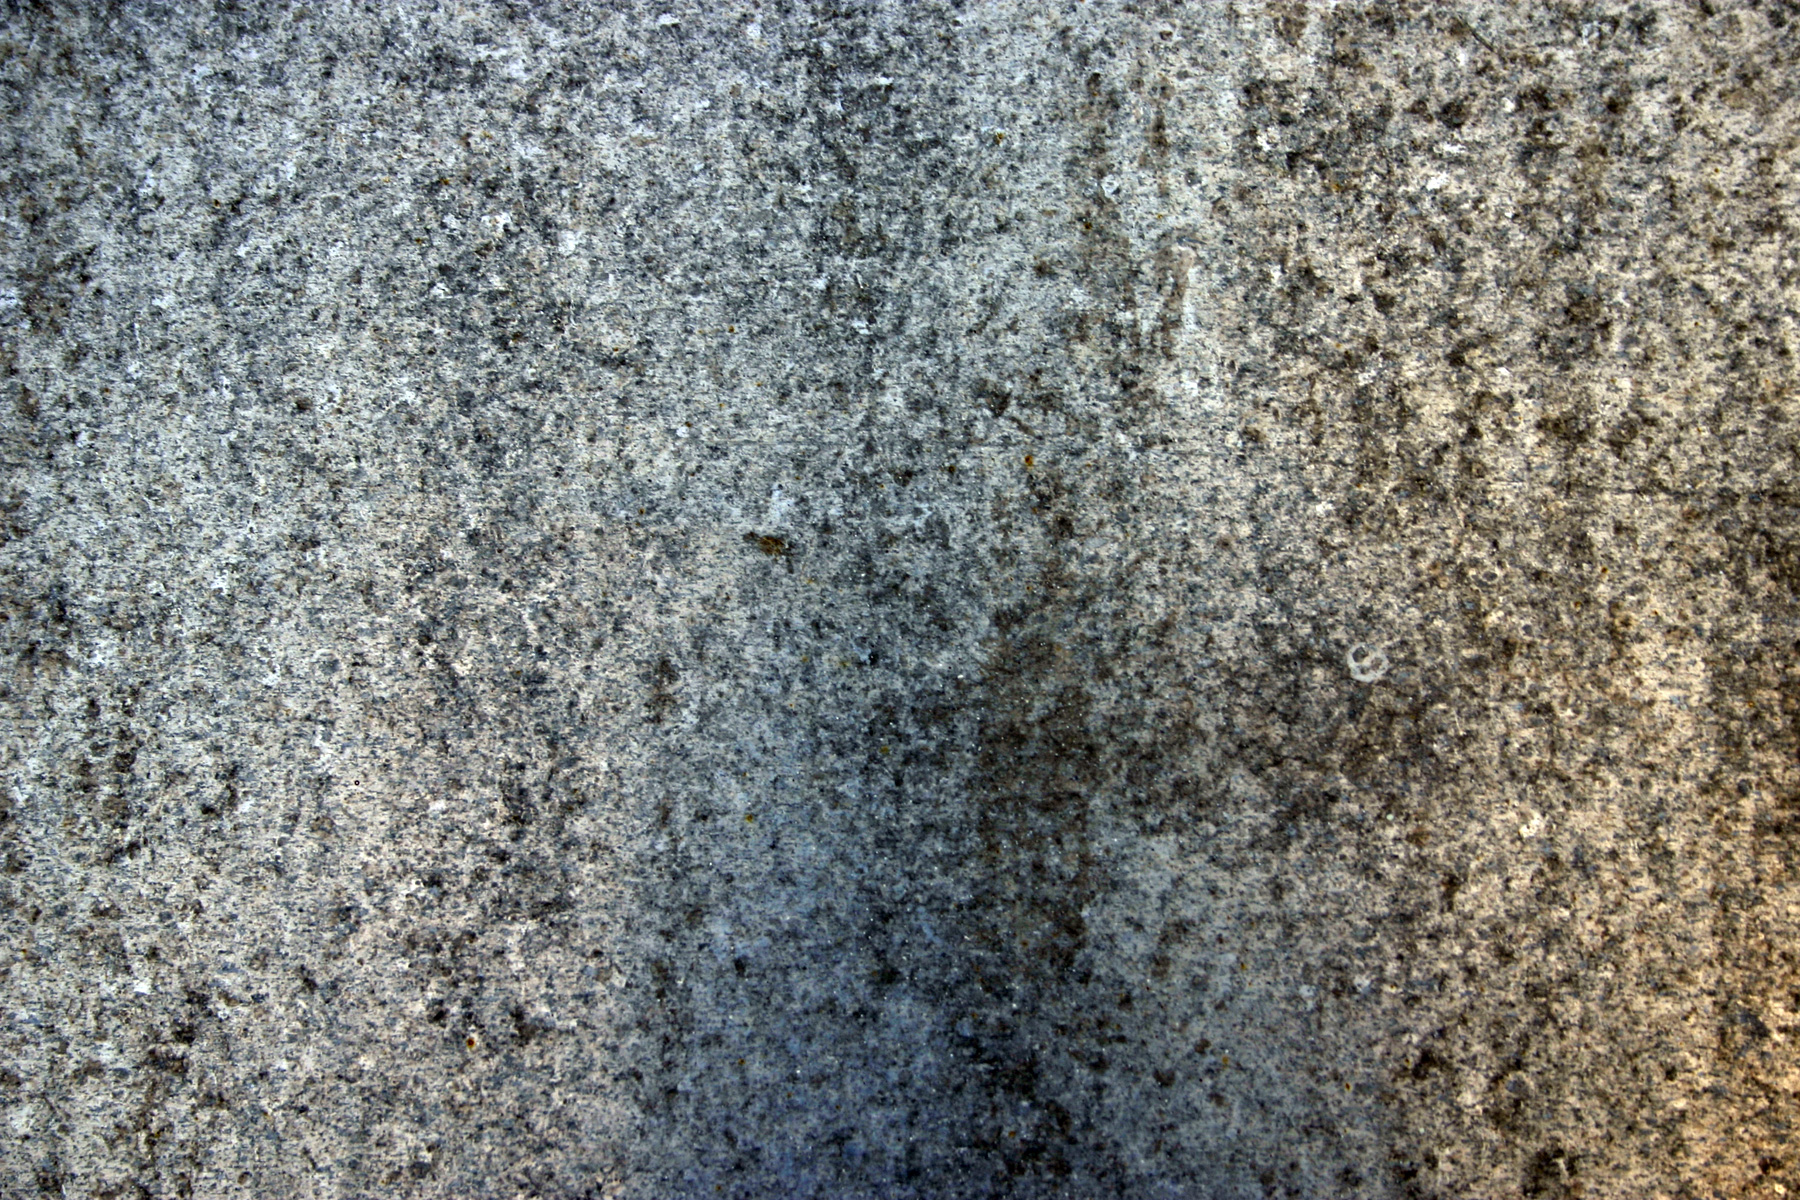 Dirty concrete photo